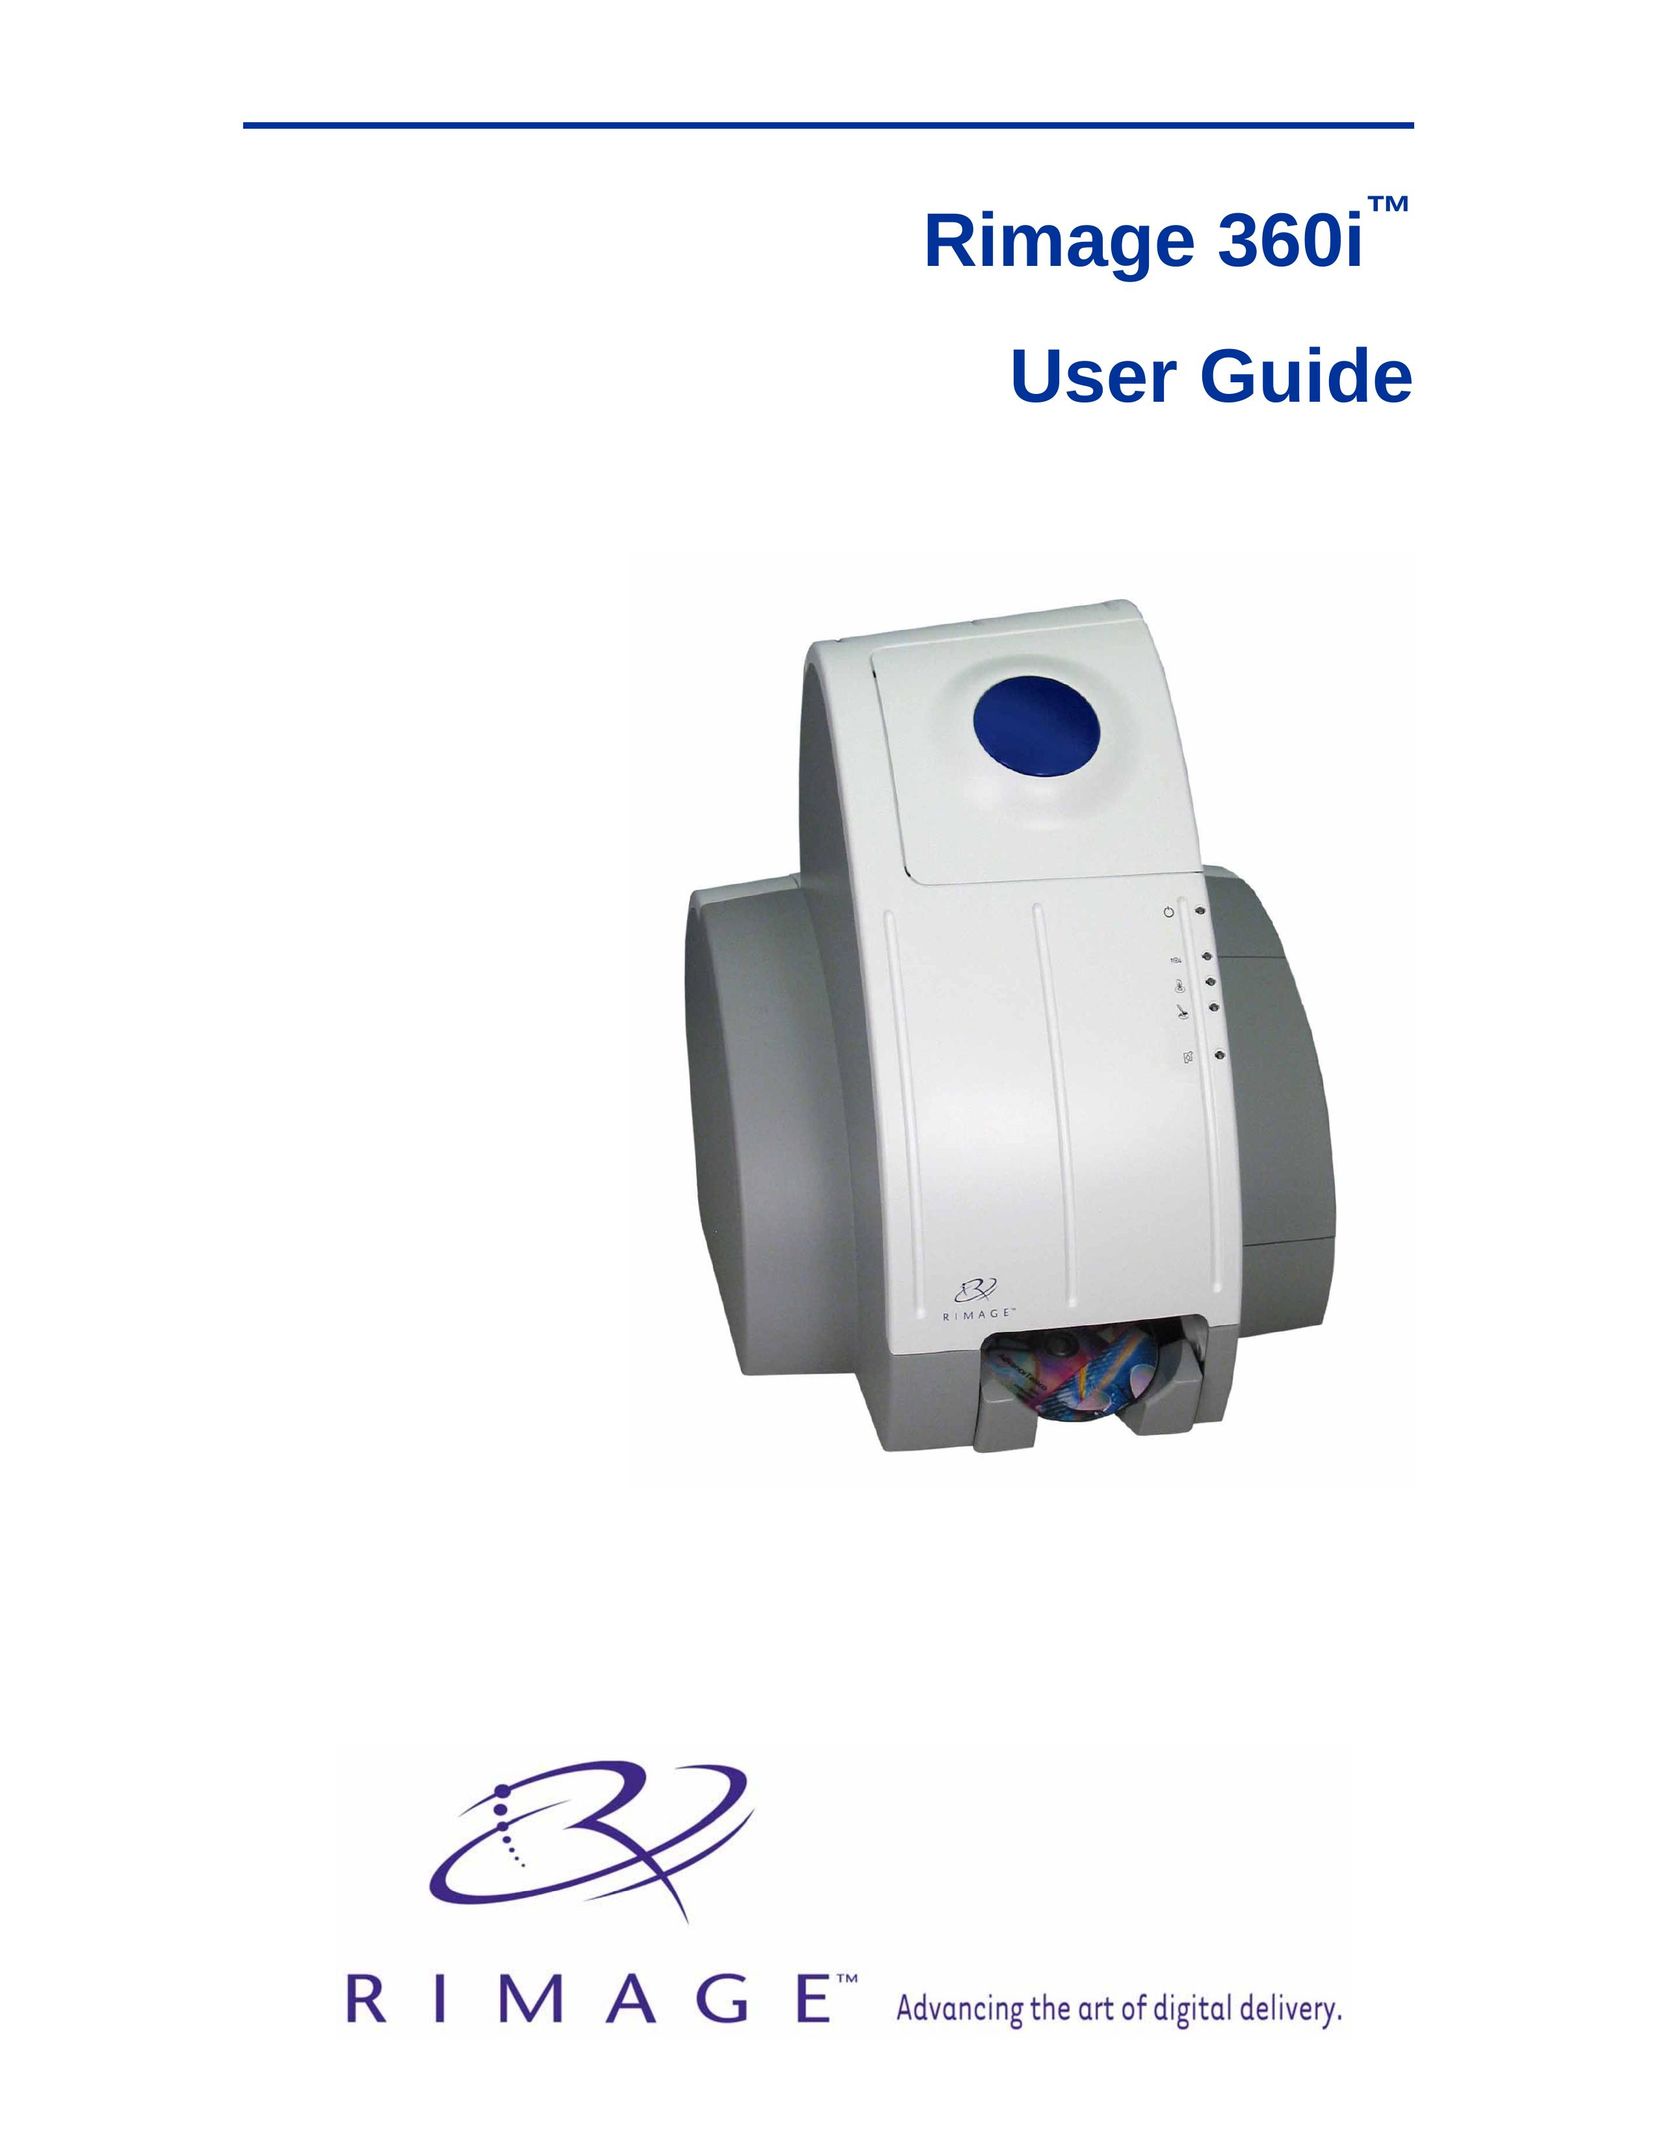 Rimage 360i Printer User Manual